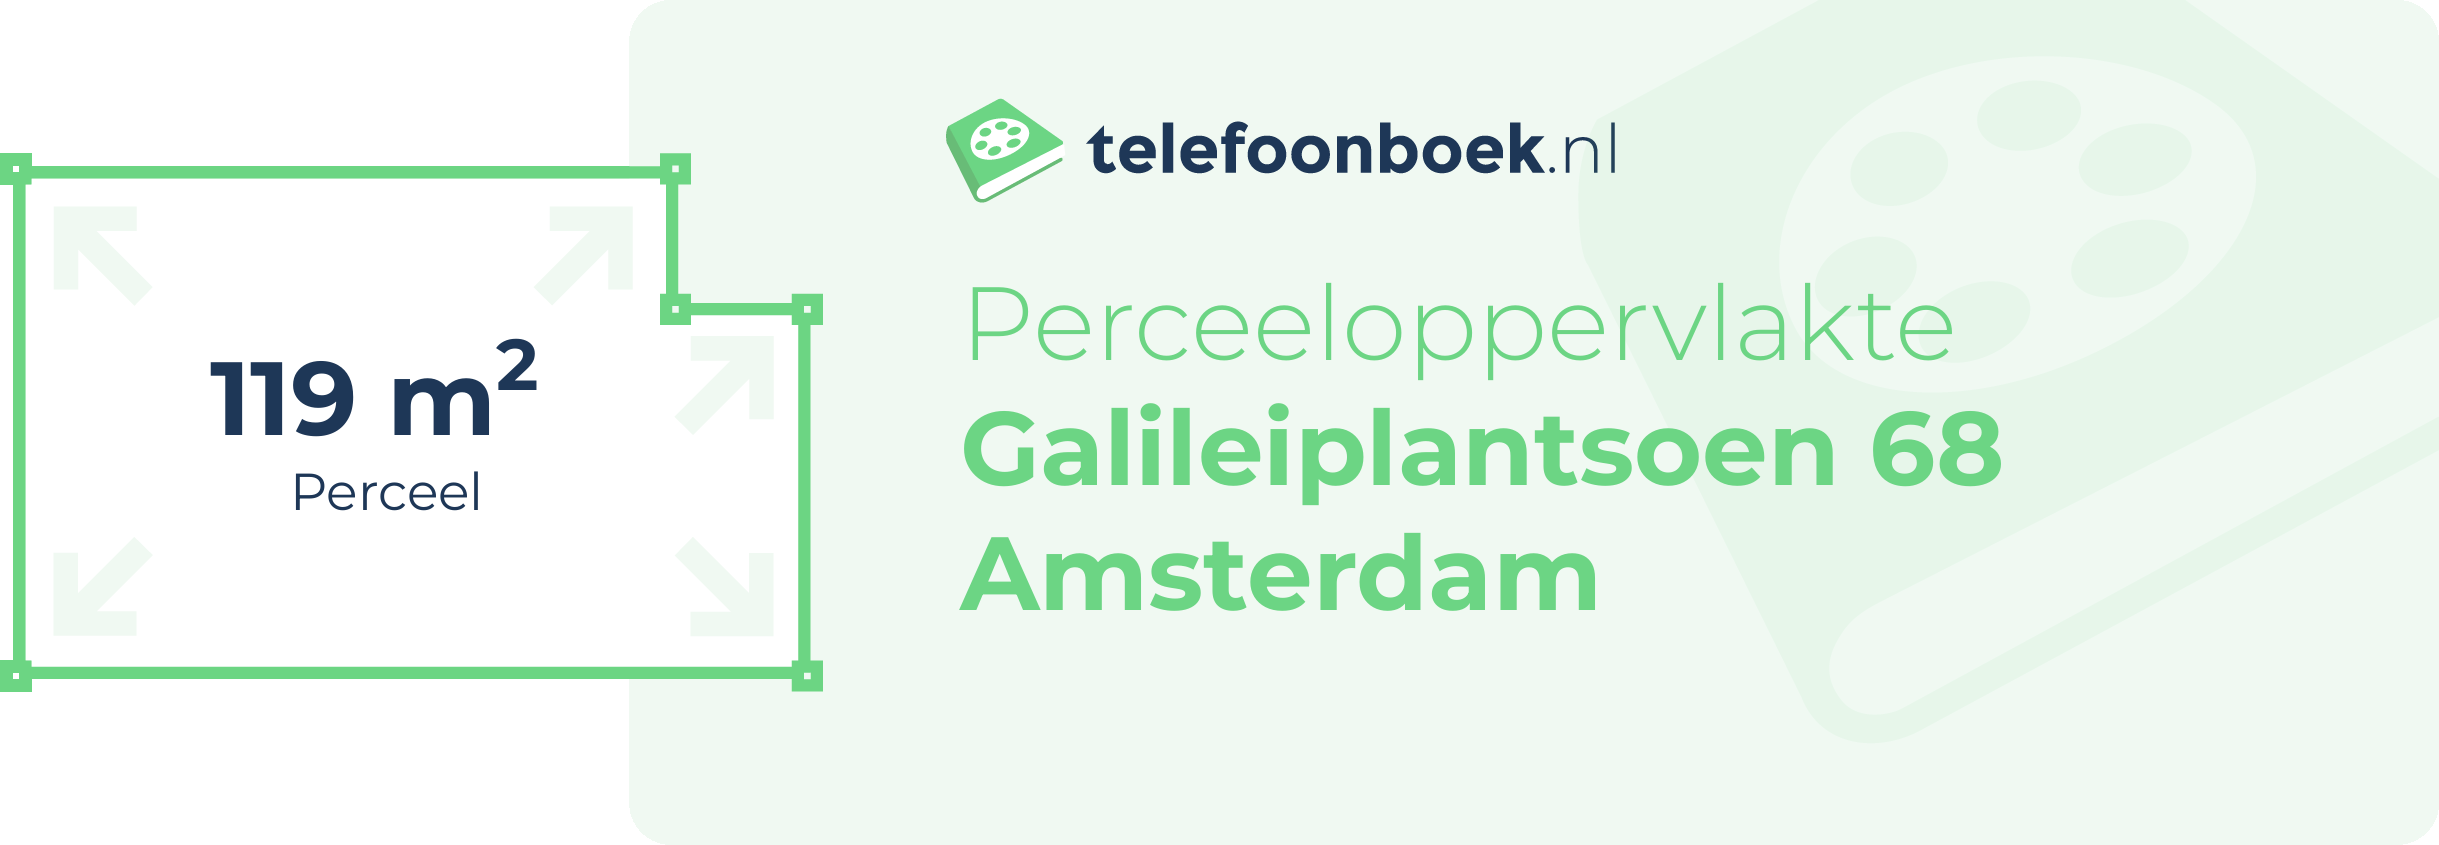 Perceeloppervlakte Galileiplantsoen 68 Amsterdam